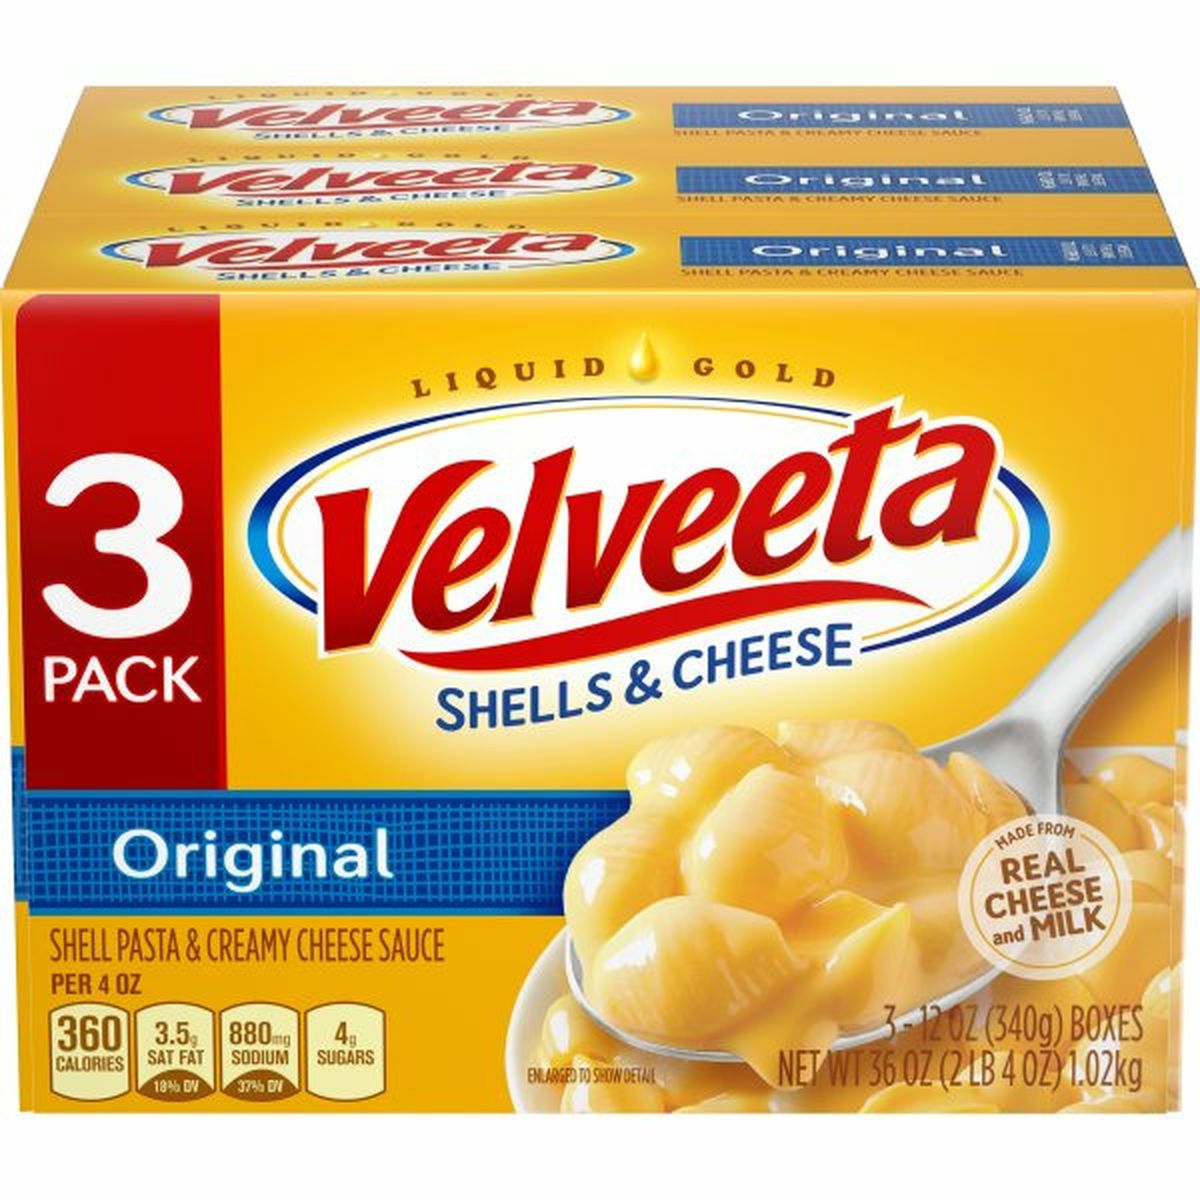 Calories in VELVEETA Shells & Cheese, Original, 3 Pack